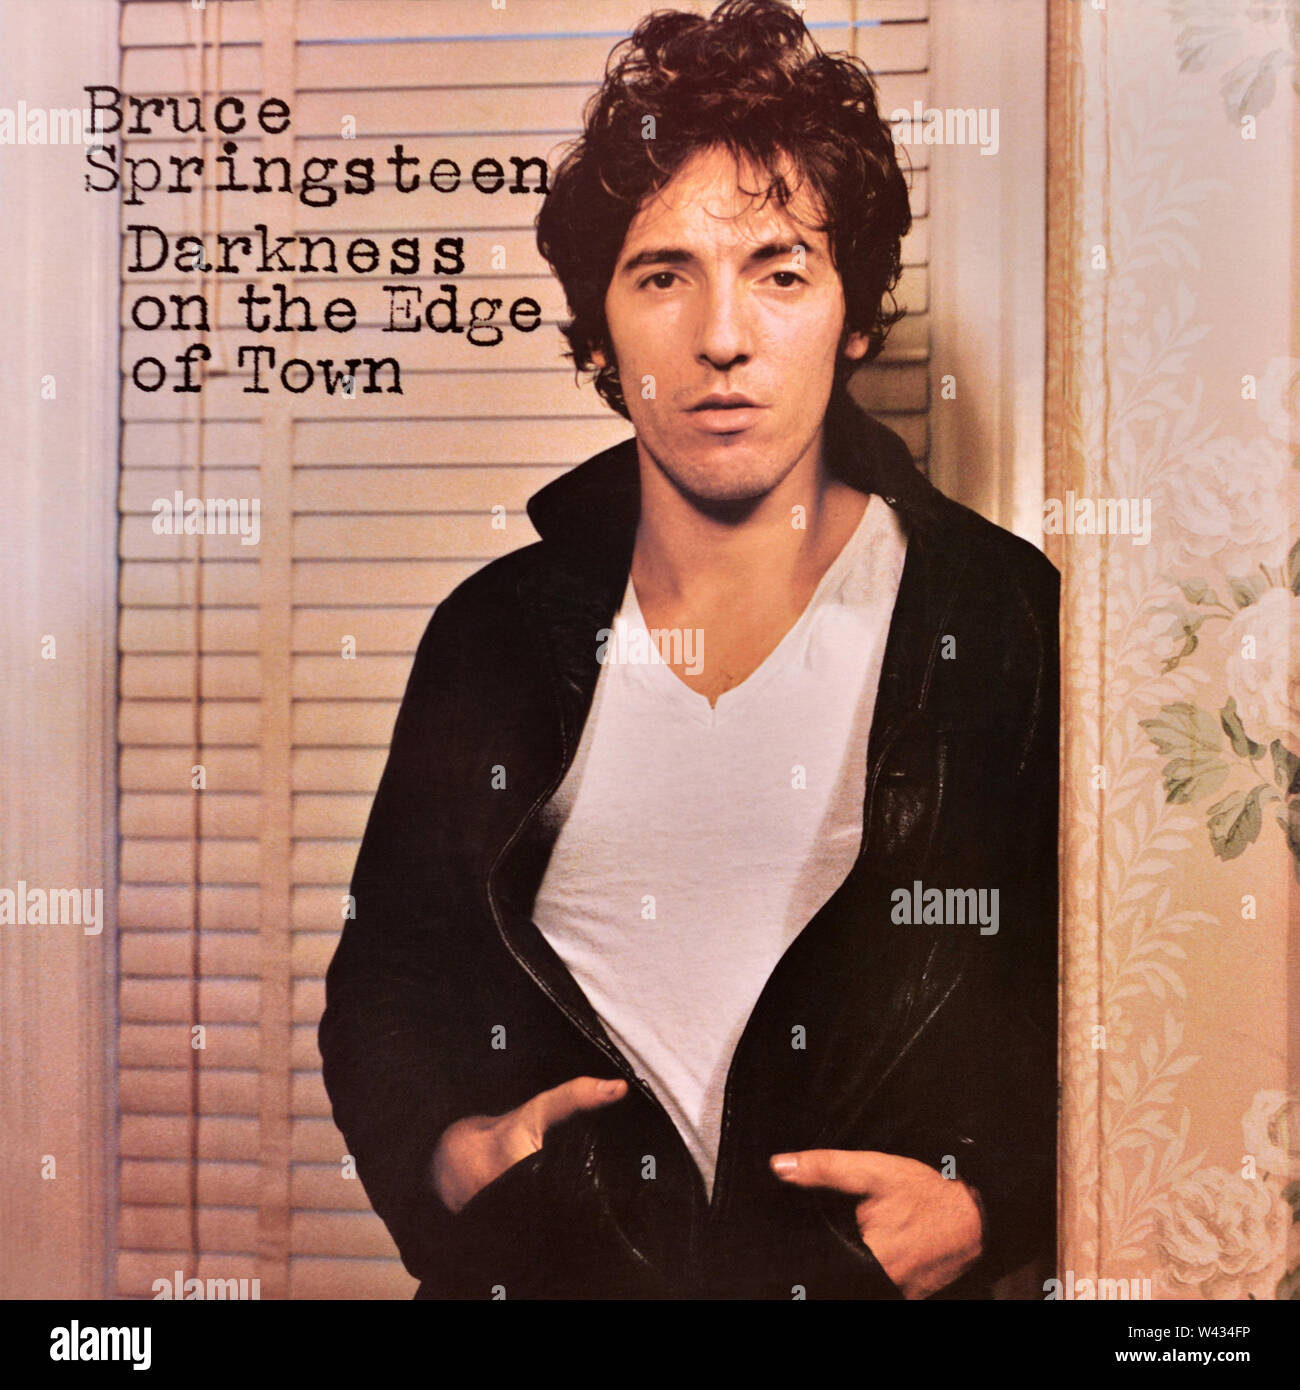 Bruce Springsteen - original Vinyl Album Cover - Darkness On The Edge of Town - 1978 Stockfoto